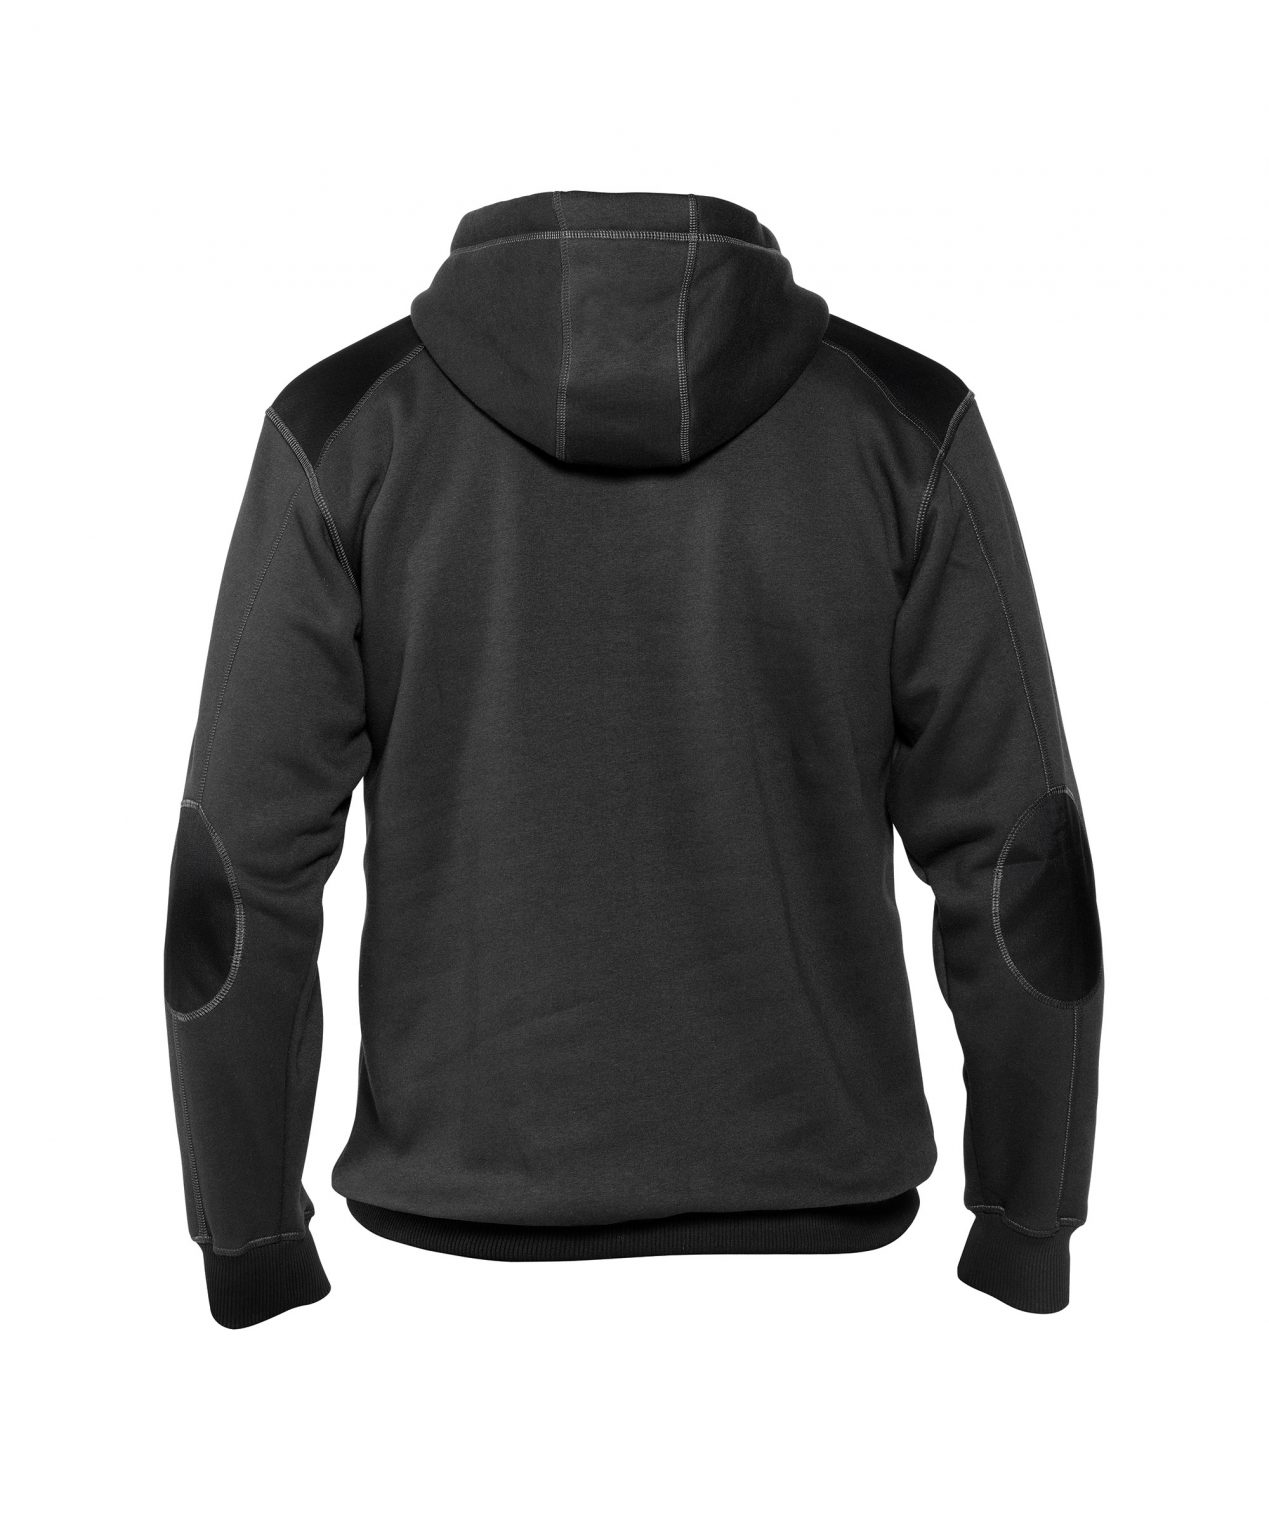 indy hooded sweatshirt anthracite grey black back